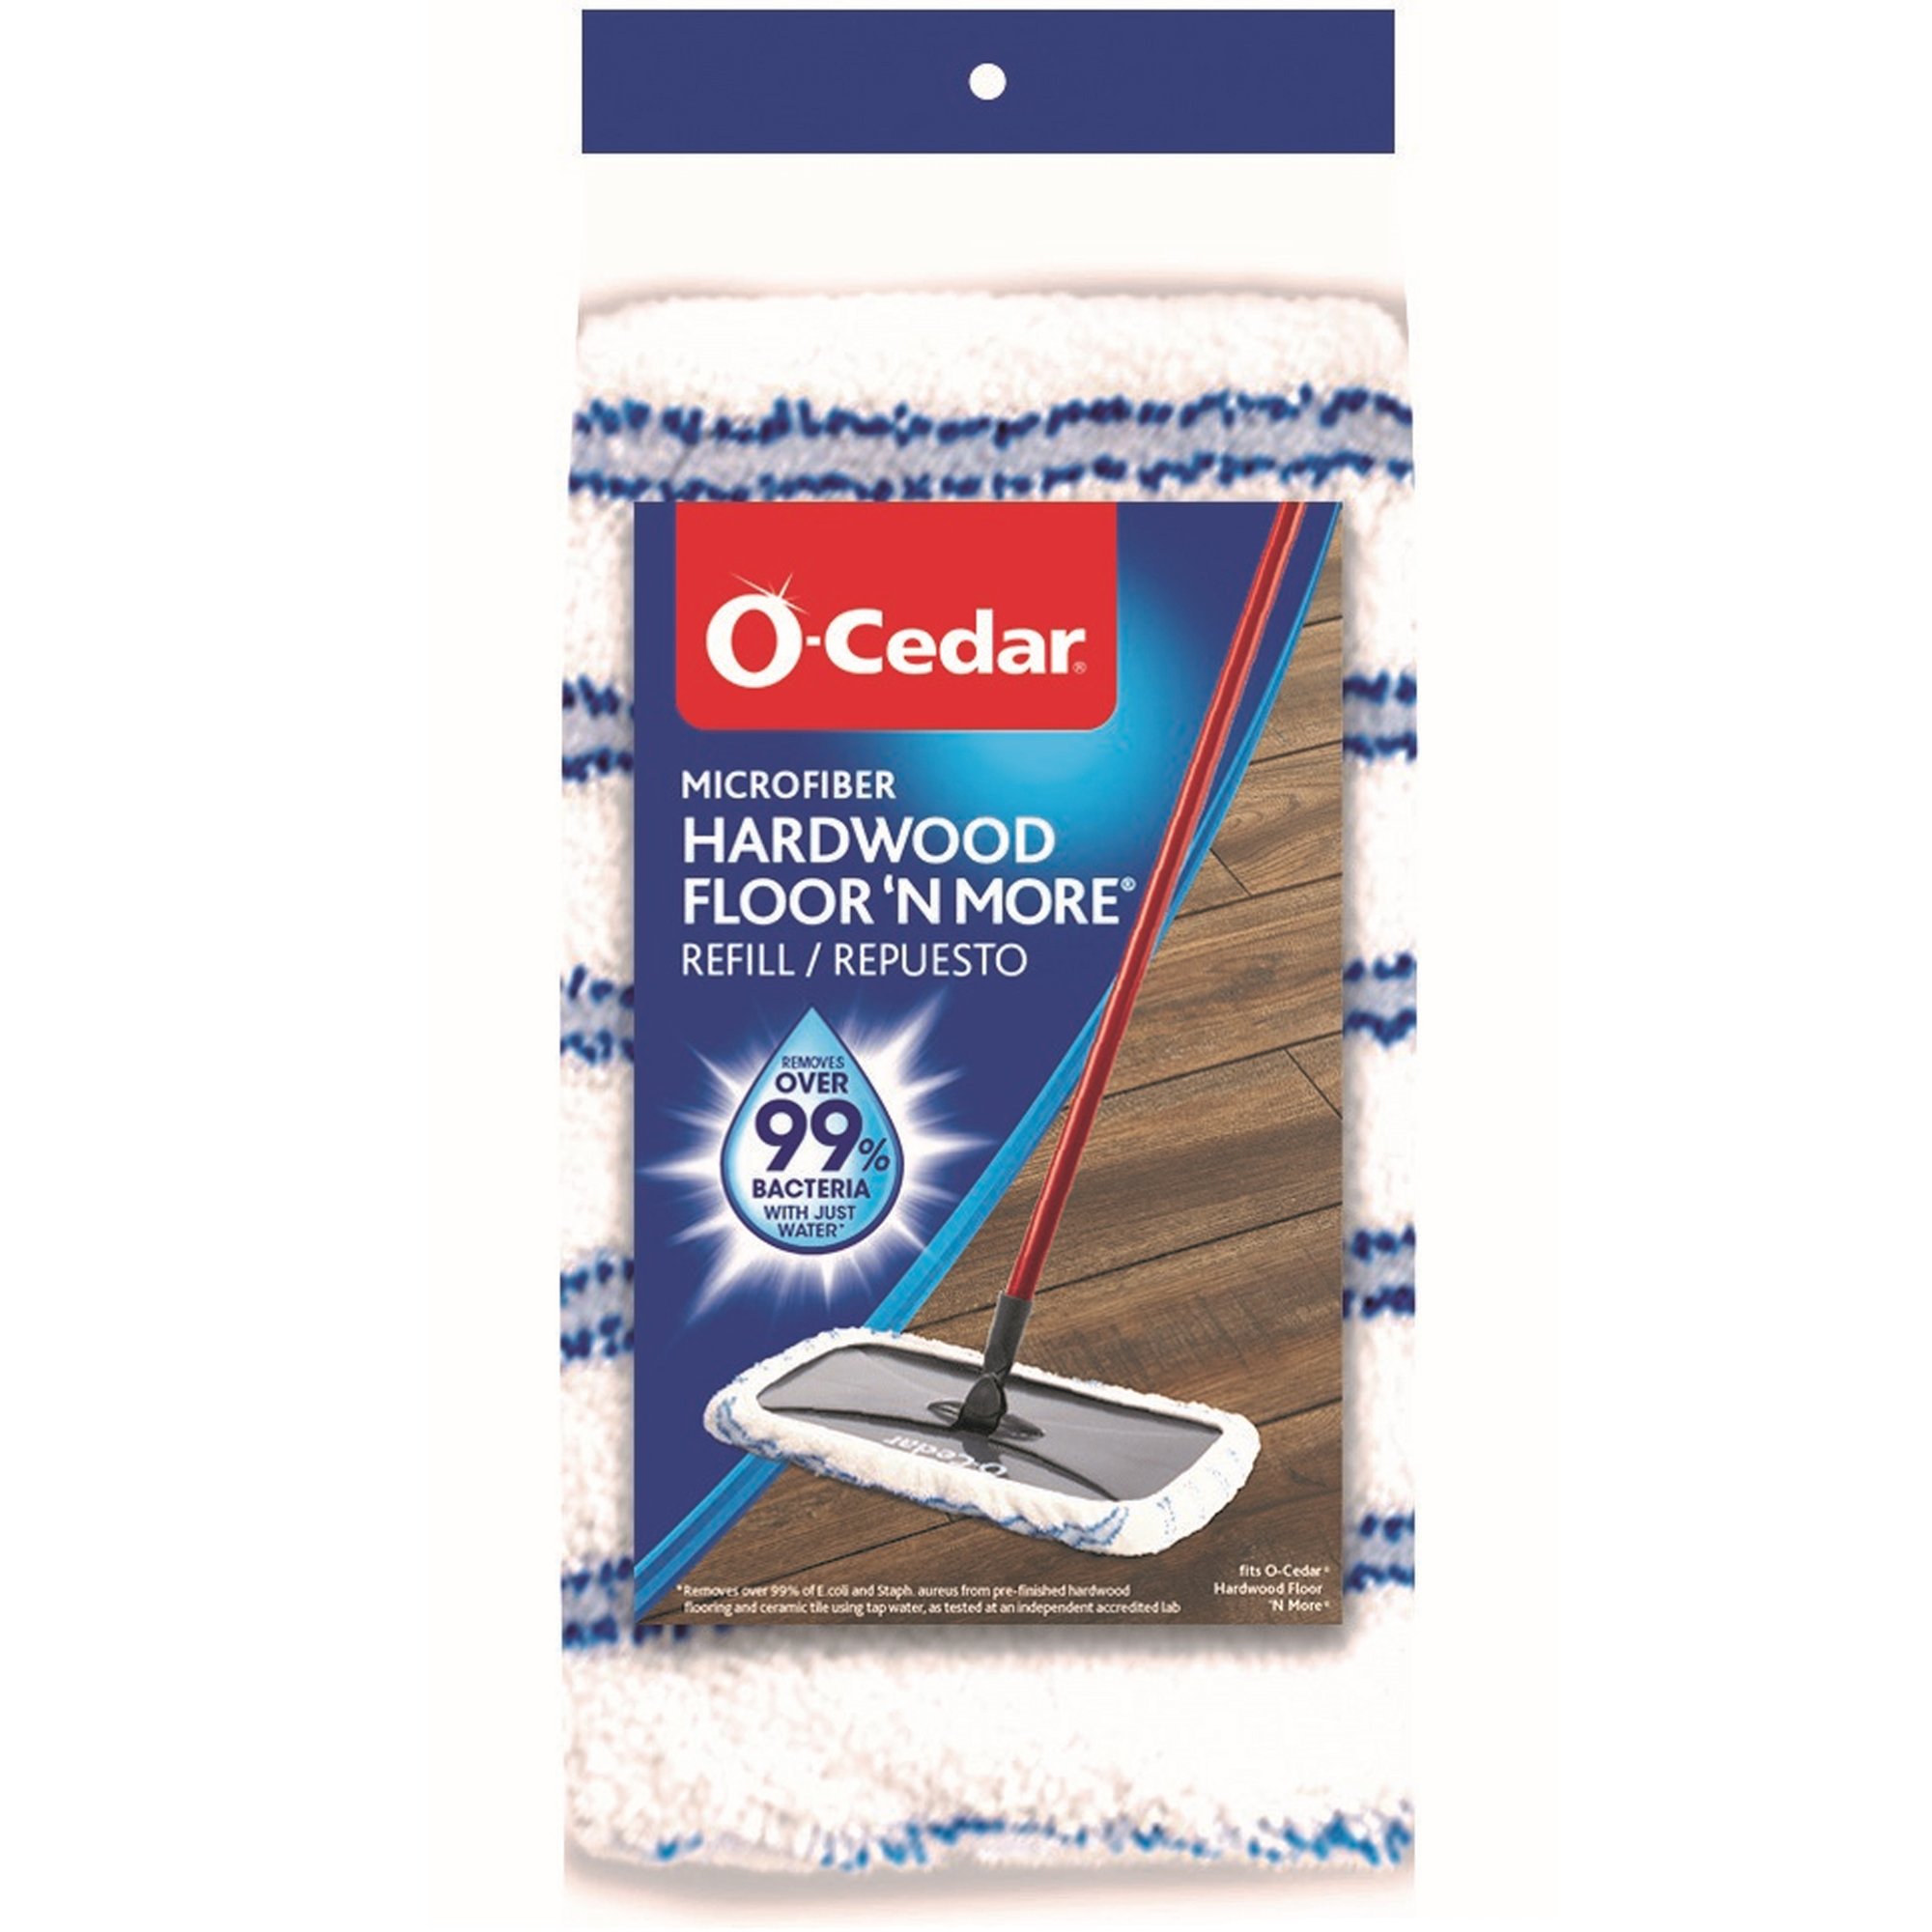 O Cedar Hardwood Floor N More Refill, O Cedar Hardwood Floor N More Mop